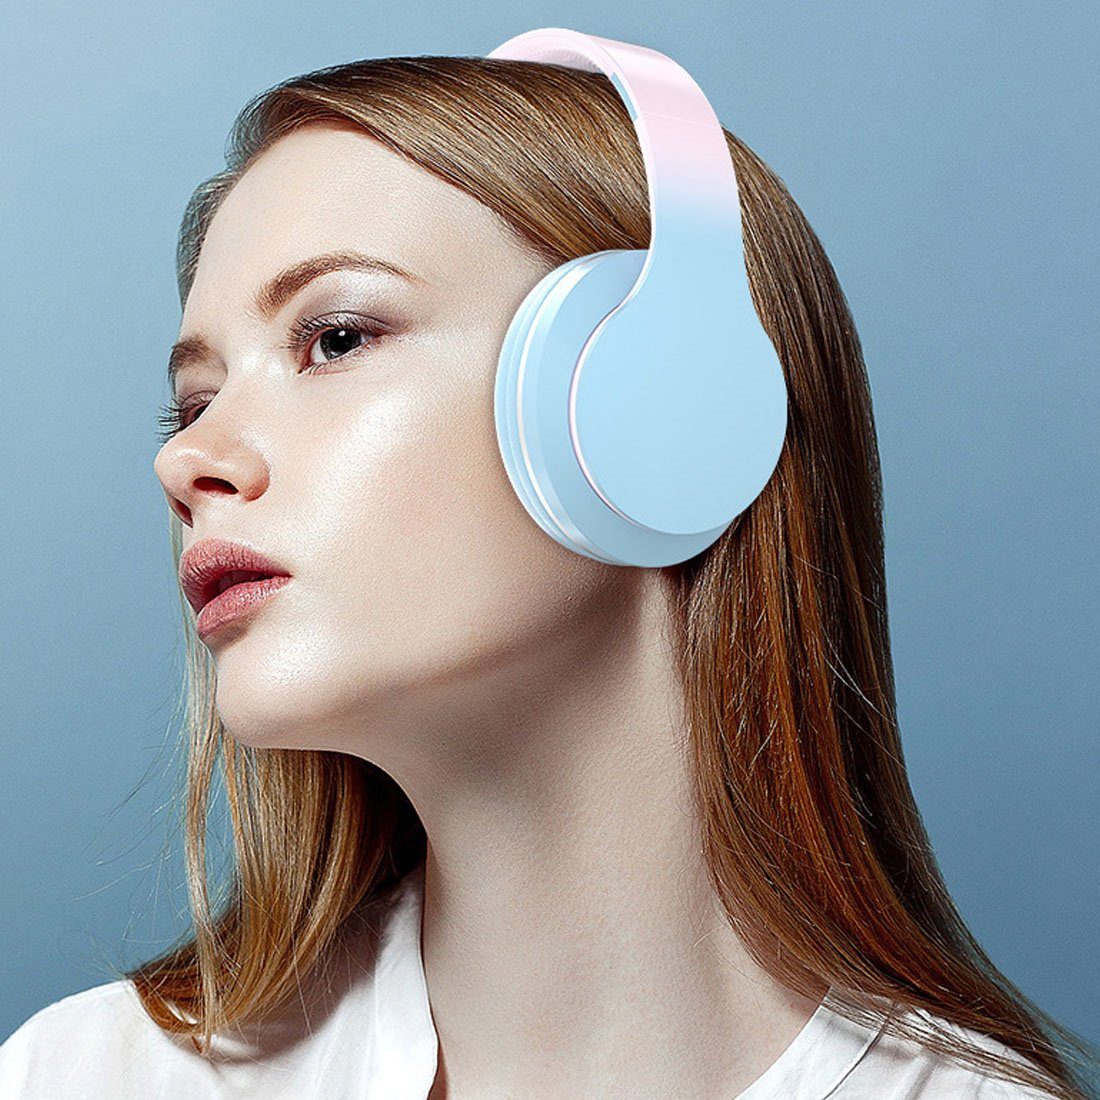 DÖRÖY Drahtloses Bluetooth-Headset Bluetooth-Kopfhörer mit Farbverlauf, Gaming-Headset, Lila Headset